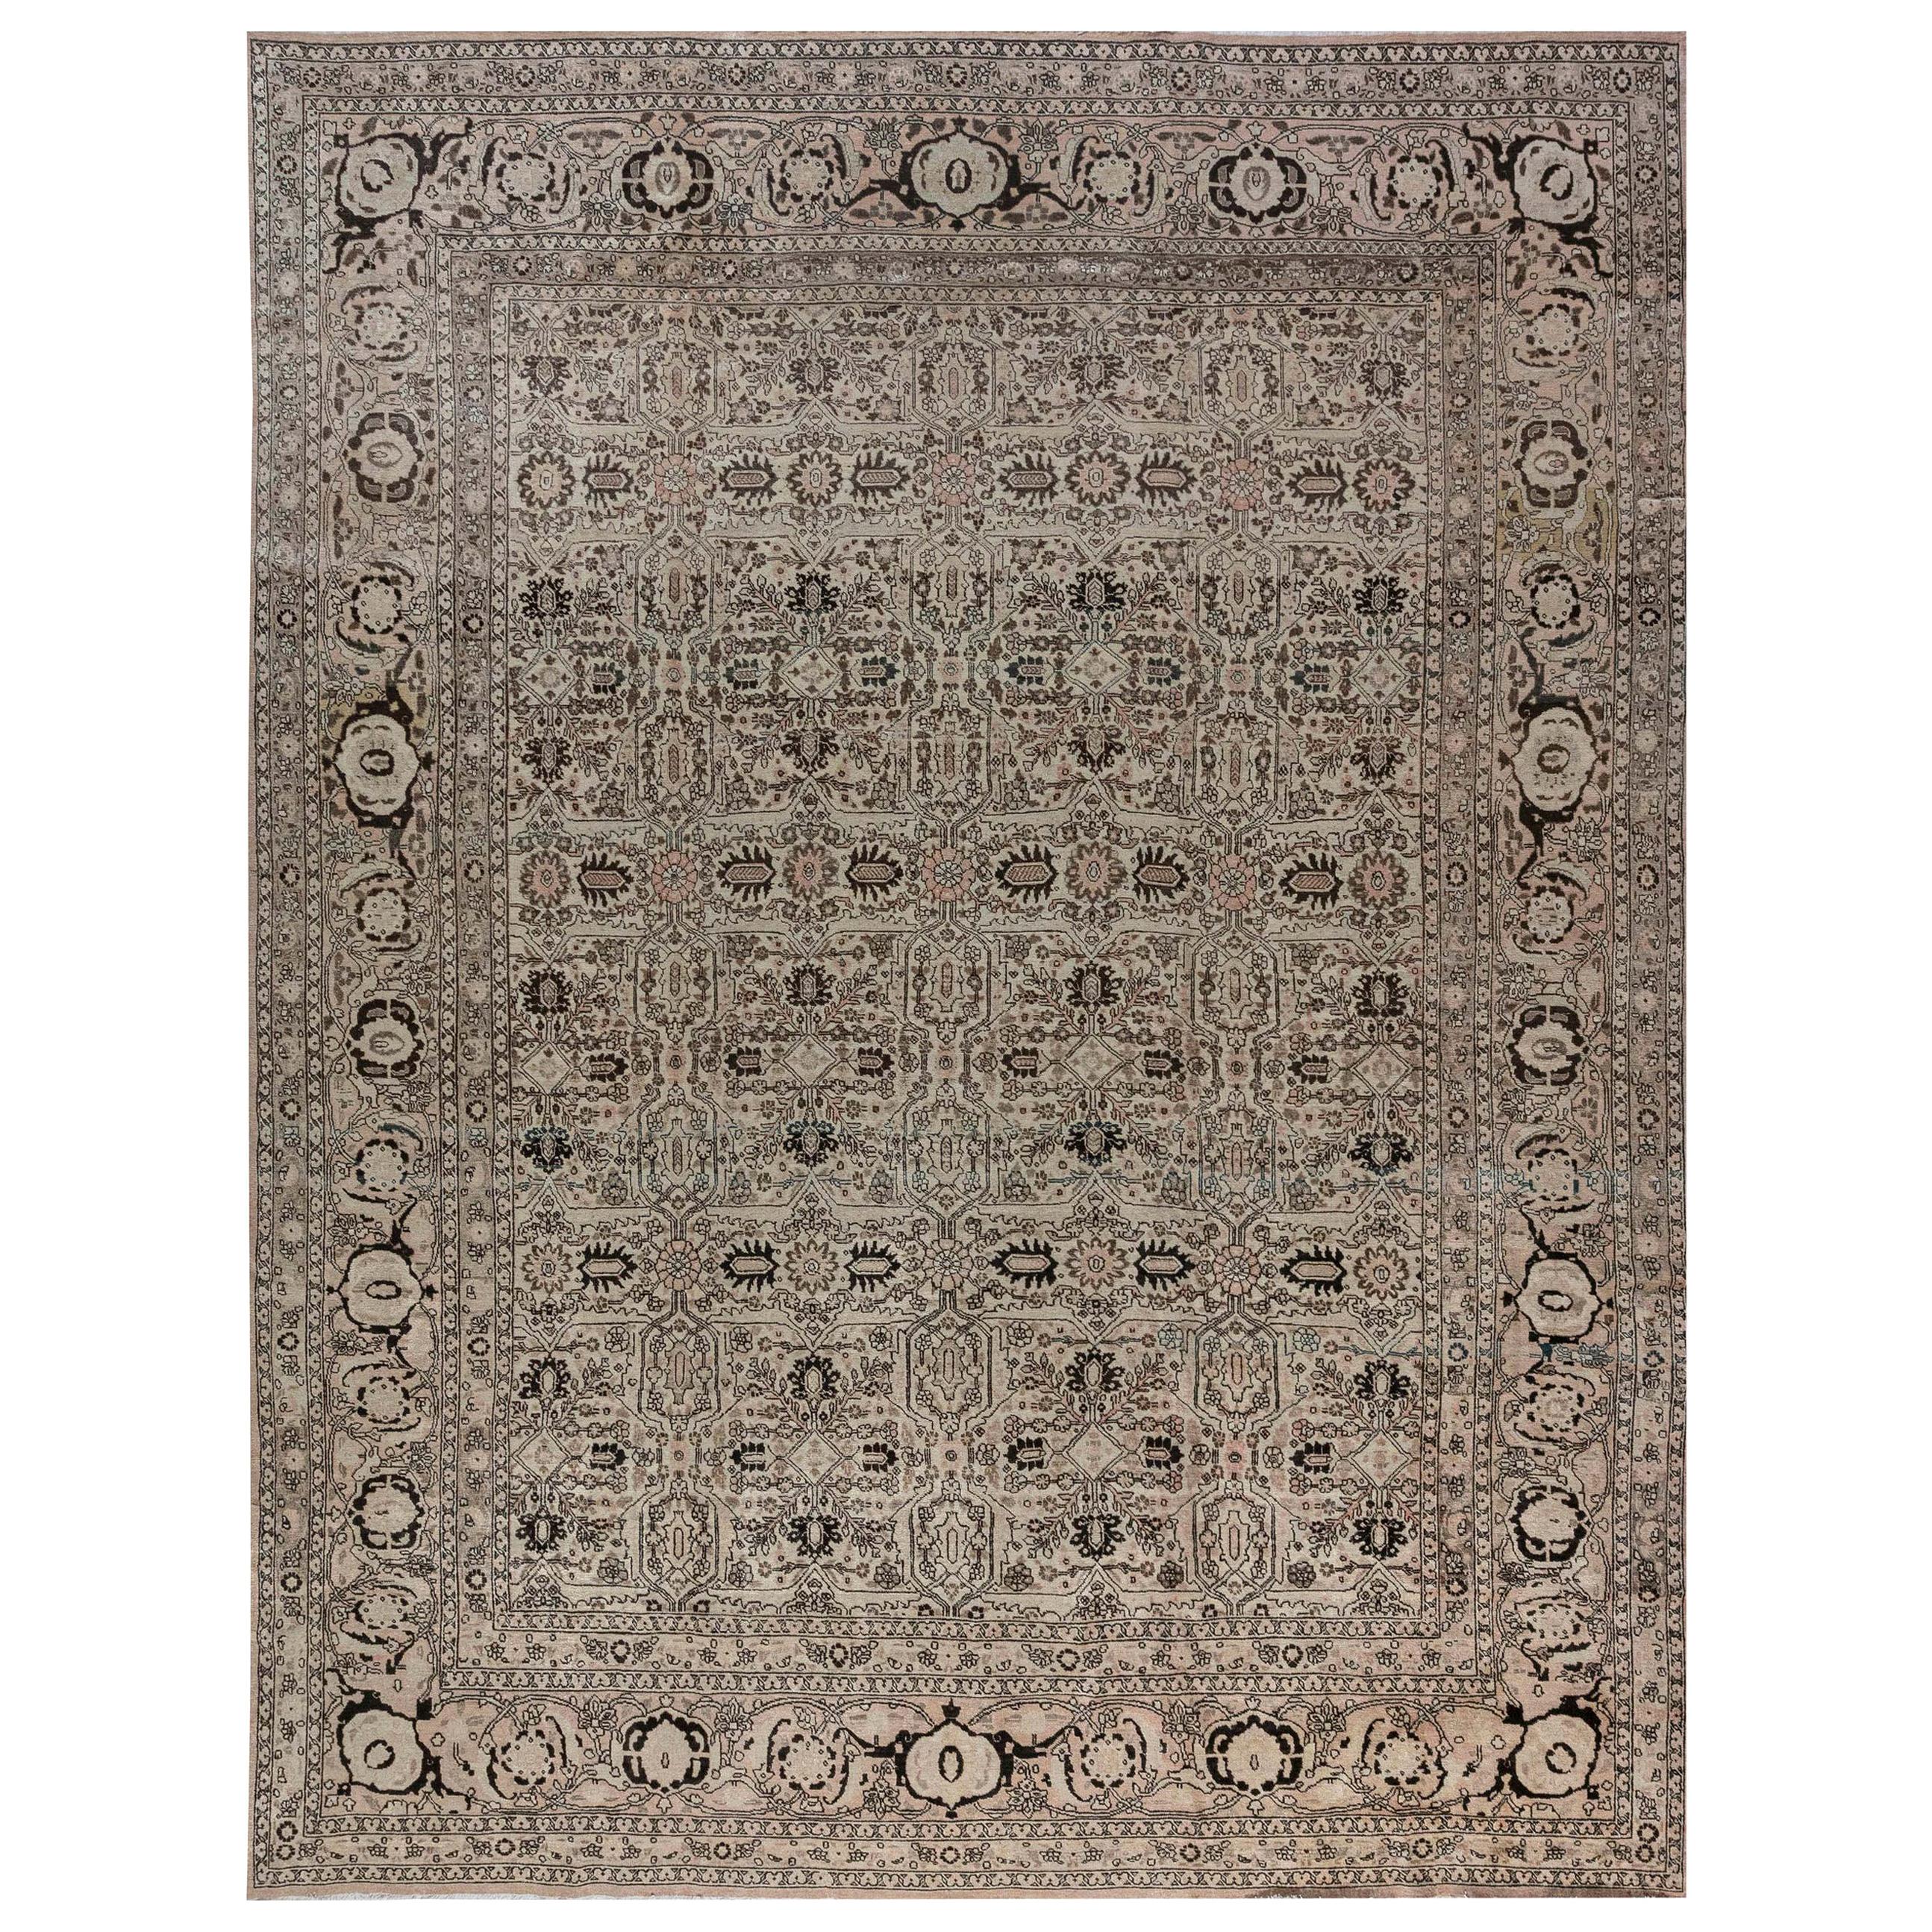 Authentic 1900s Persian Tabriz Handmade Wool Carpet